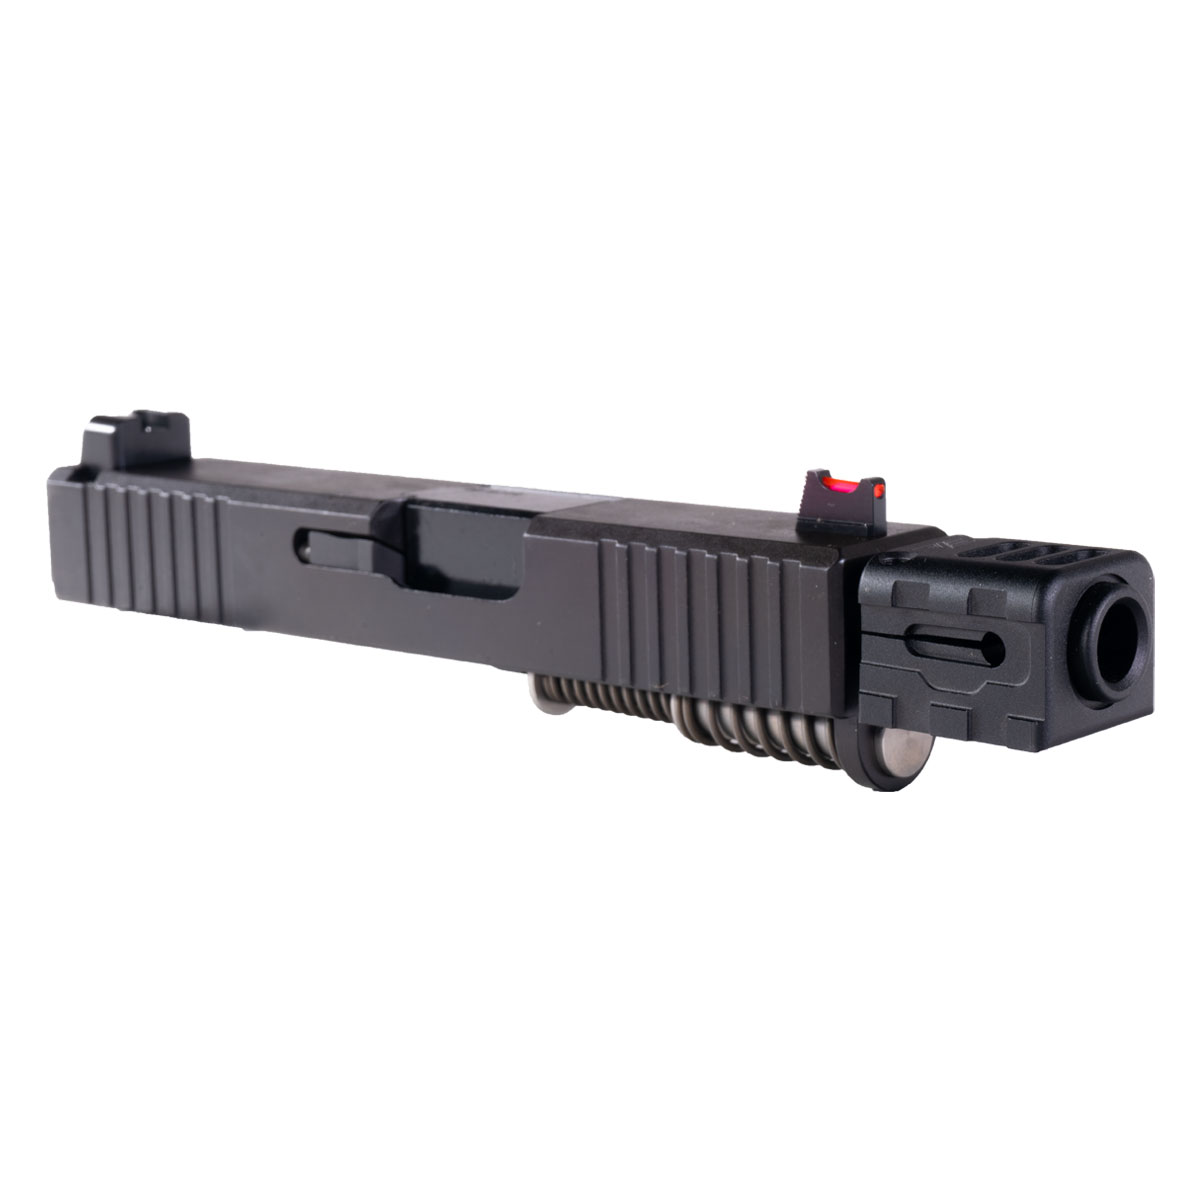 DTT 'Pyknic w/ Sylvan Arms Compensator' 9mm Complete Slide Kit - Glock 26 Gen 1-2 Compatible